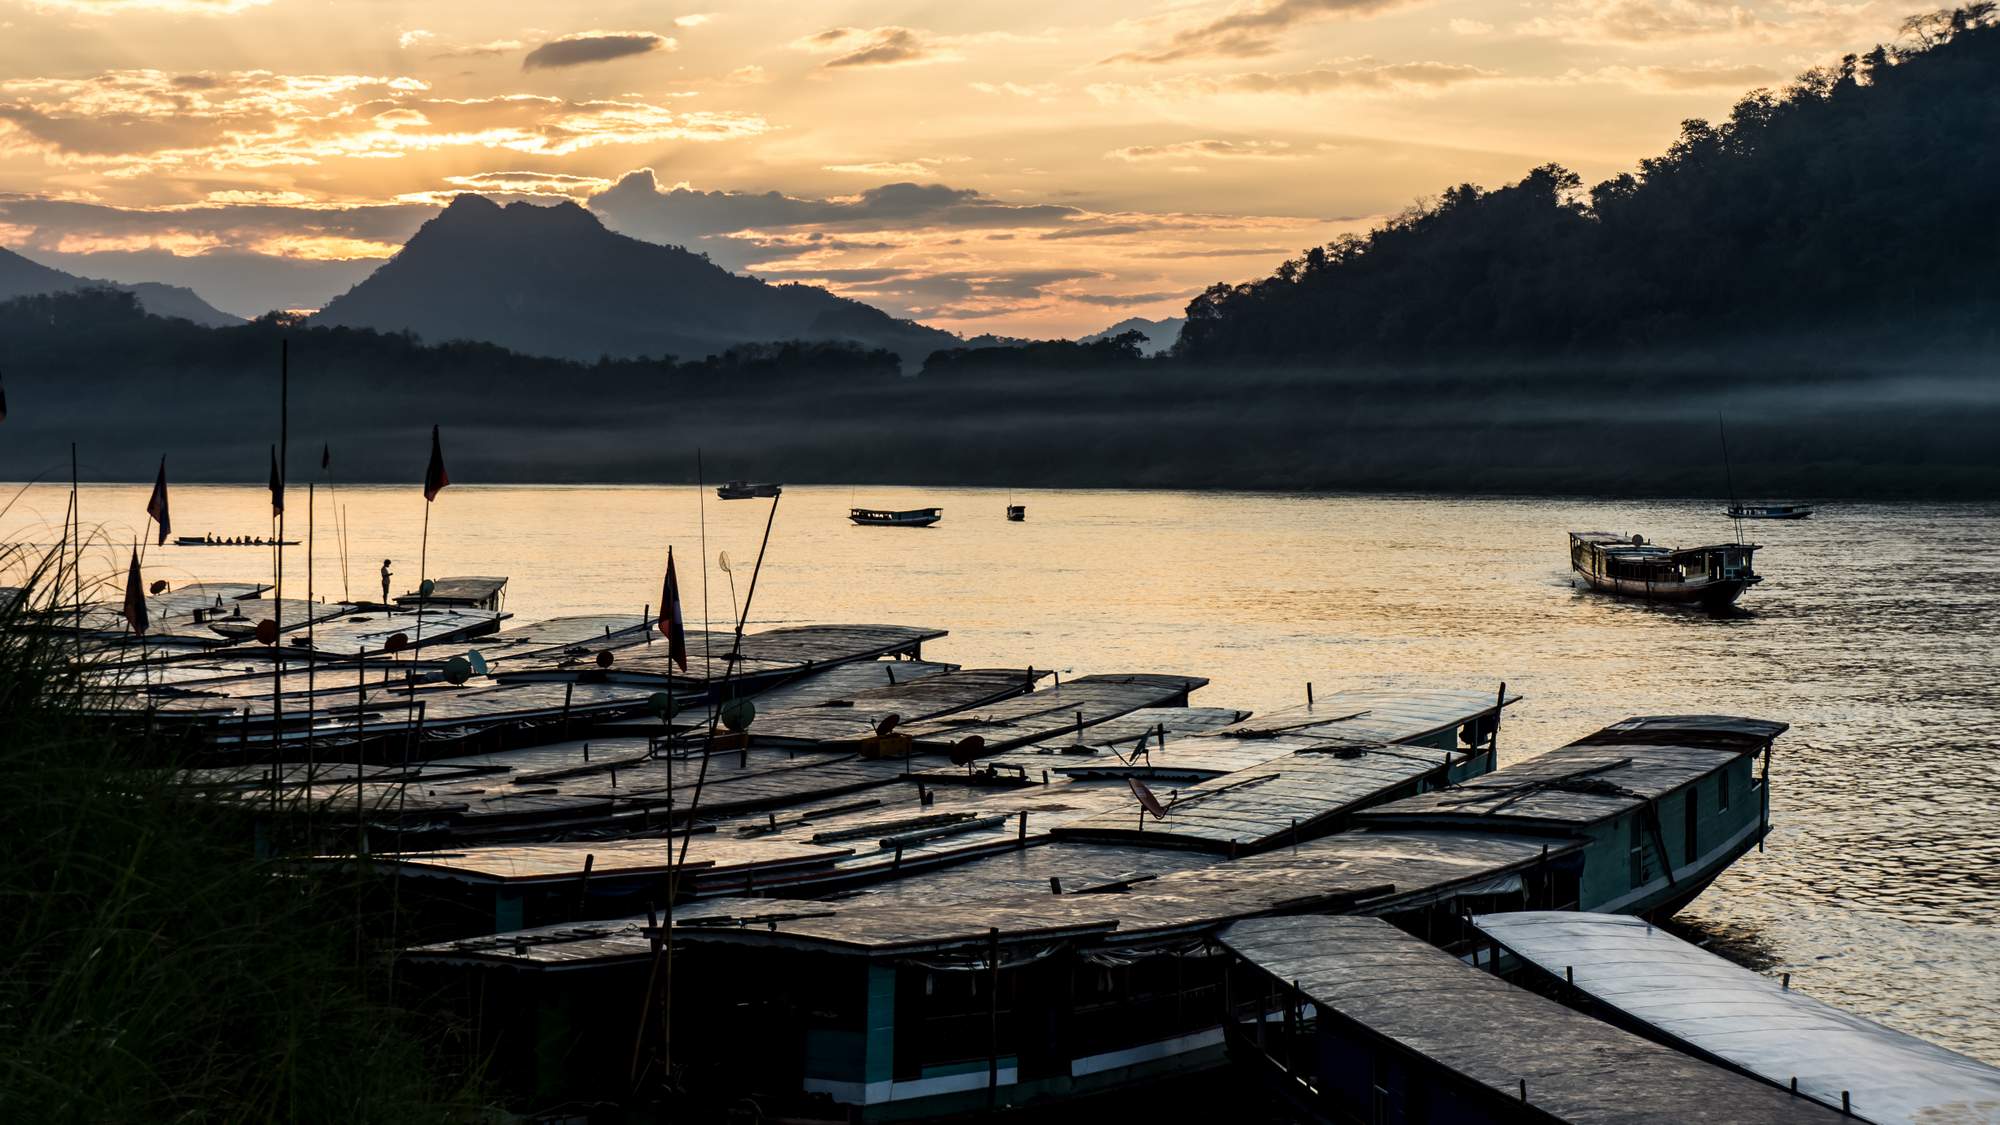  Mekong Laos